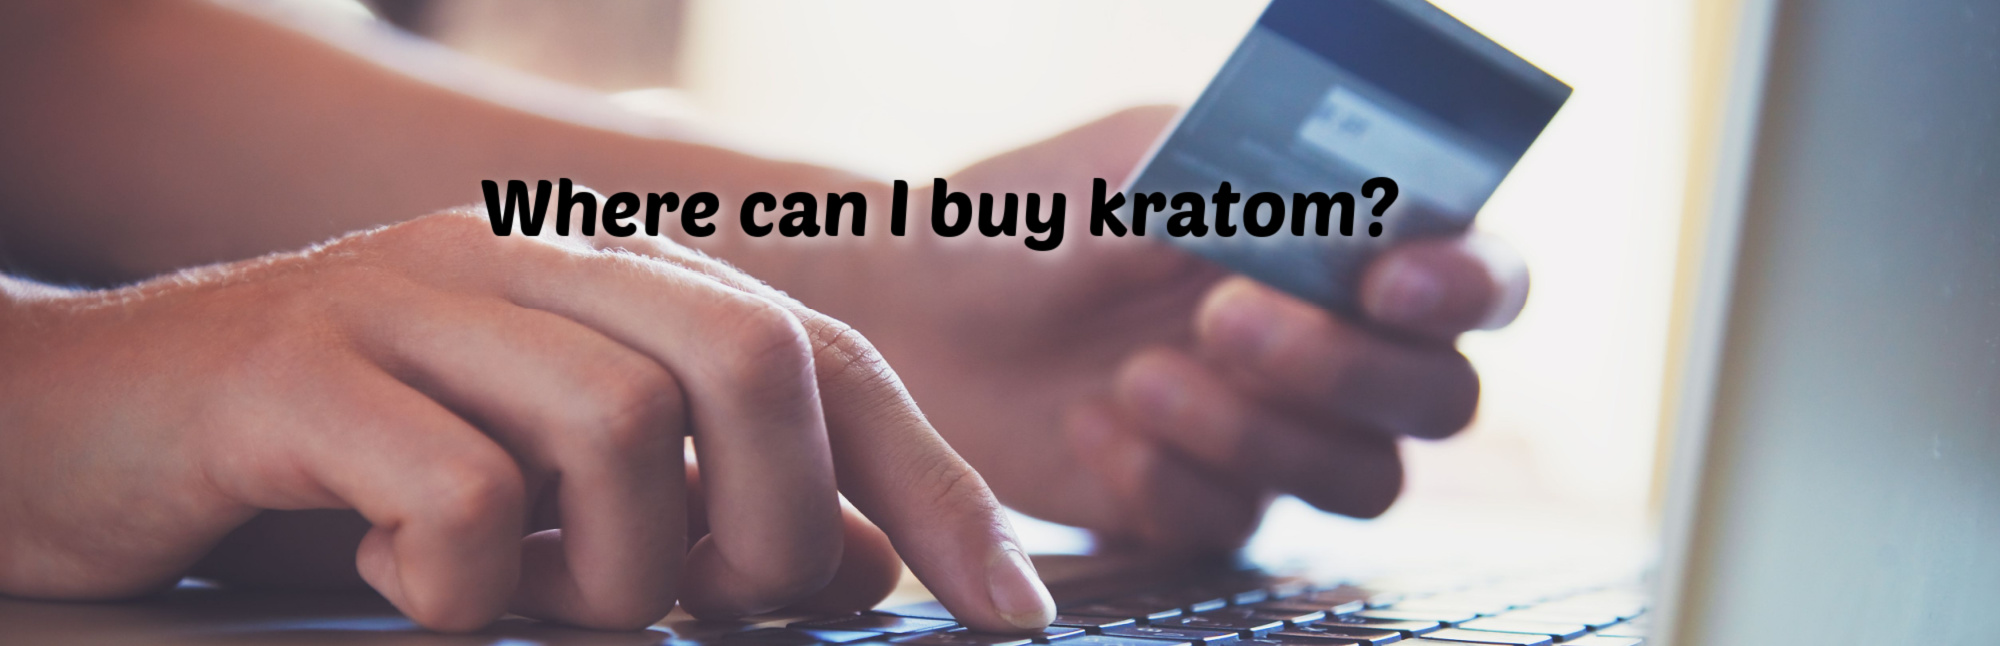 image of where can I buy kratom